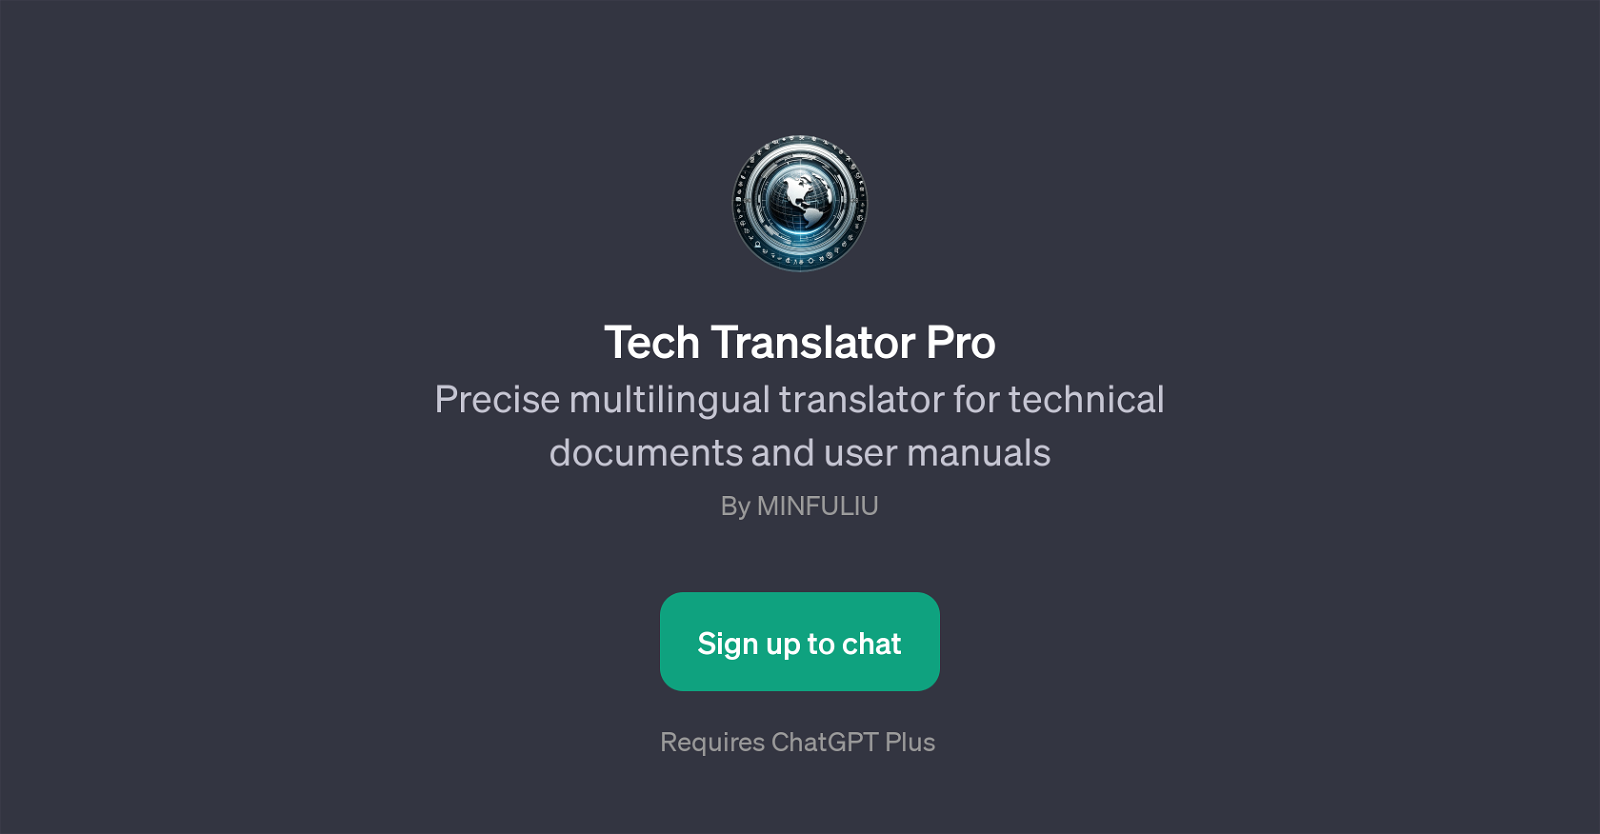 Tech Translator Pro website